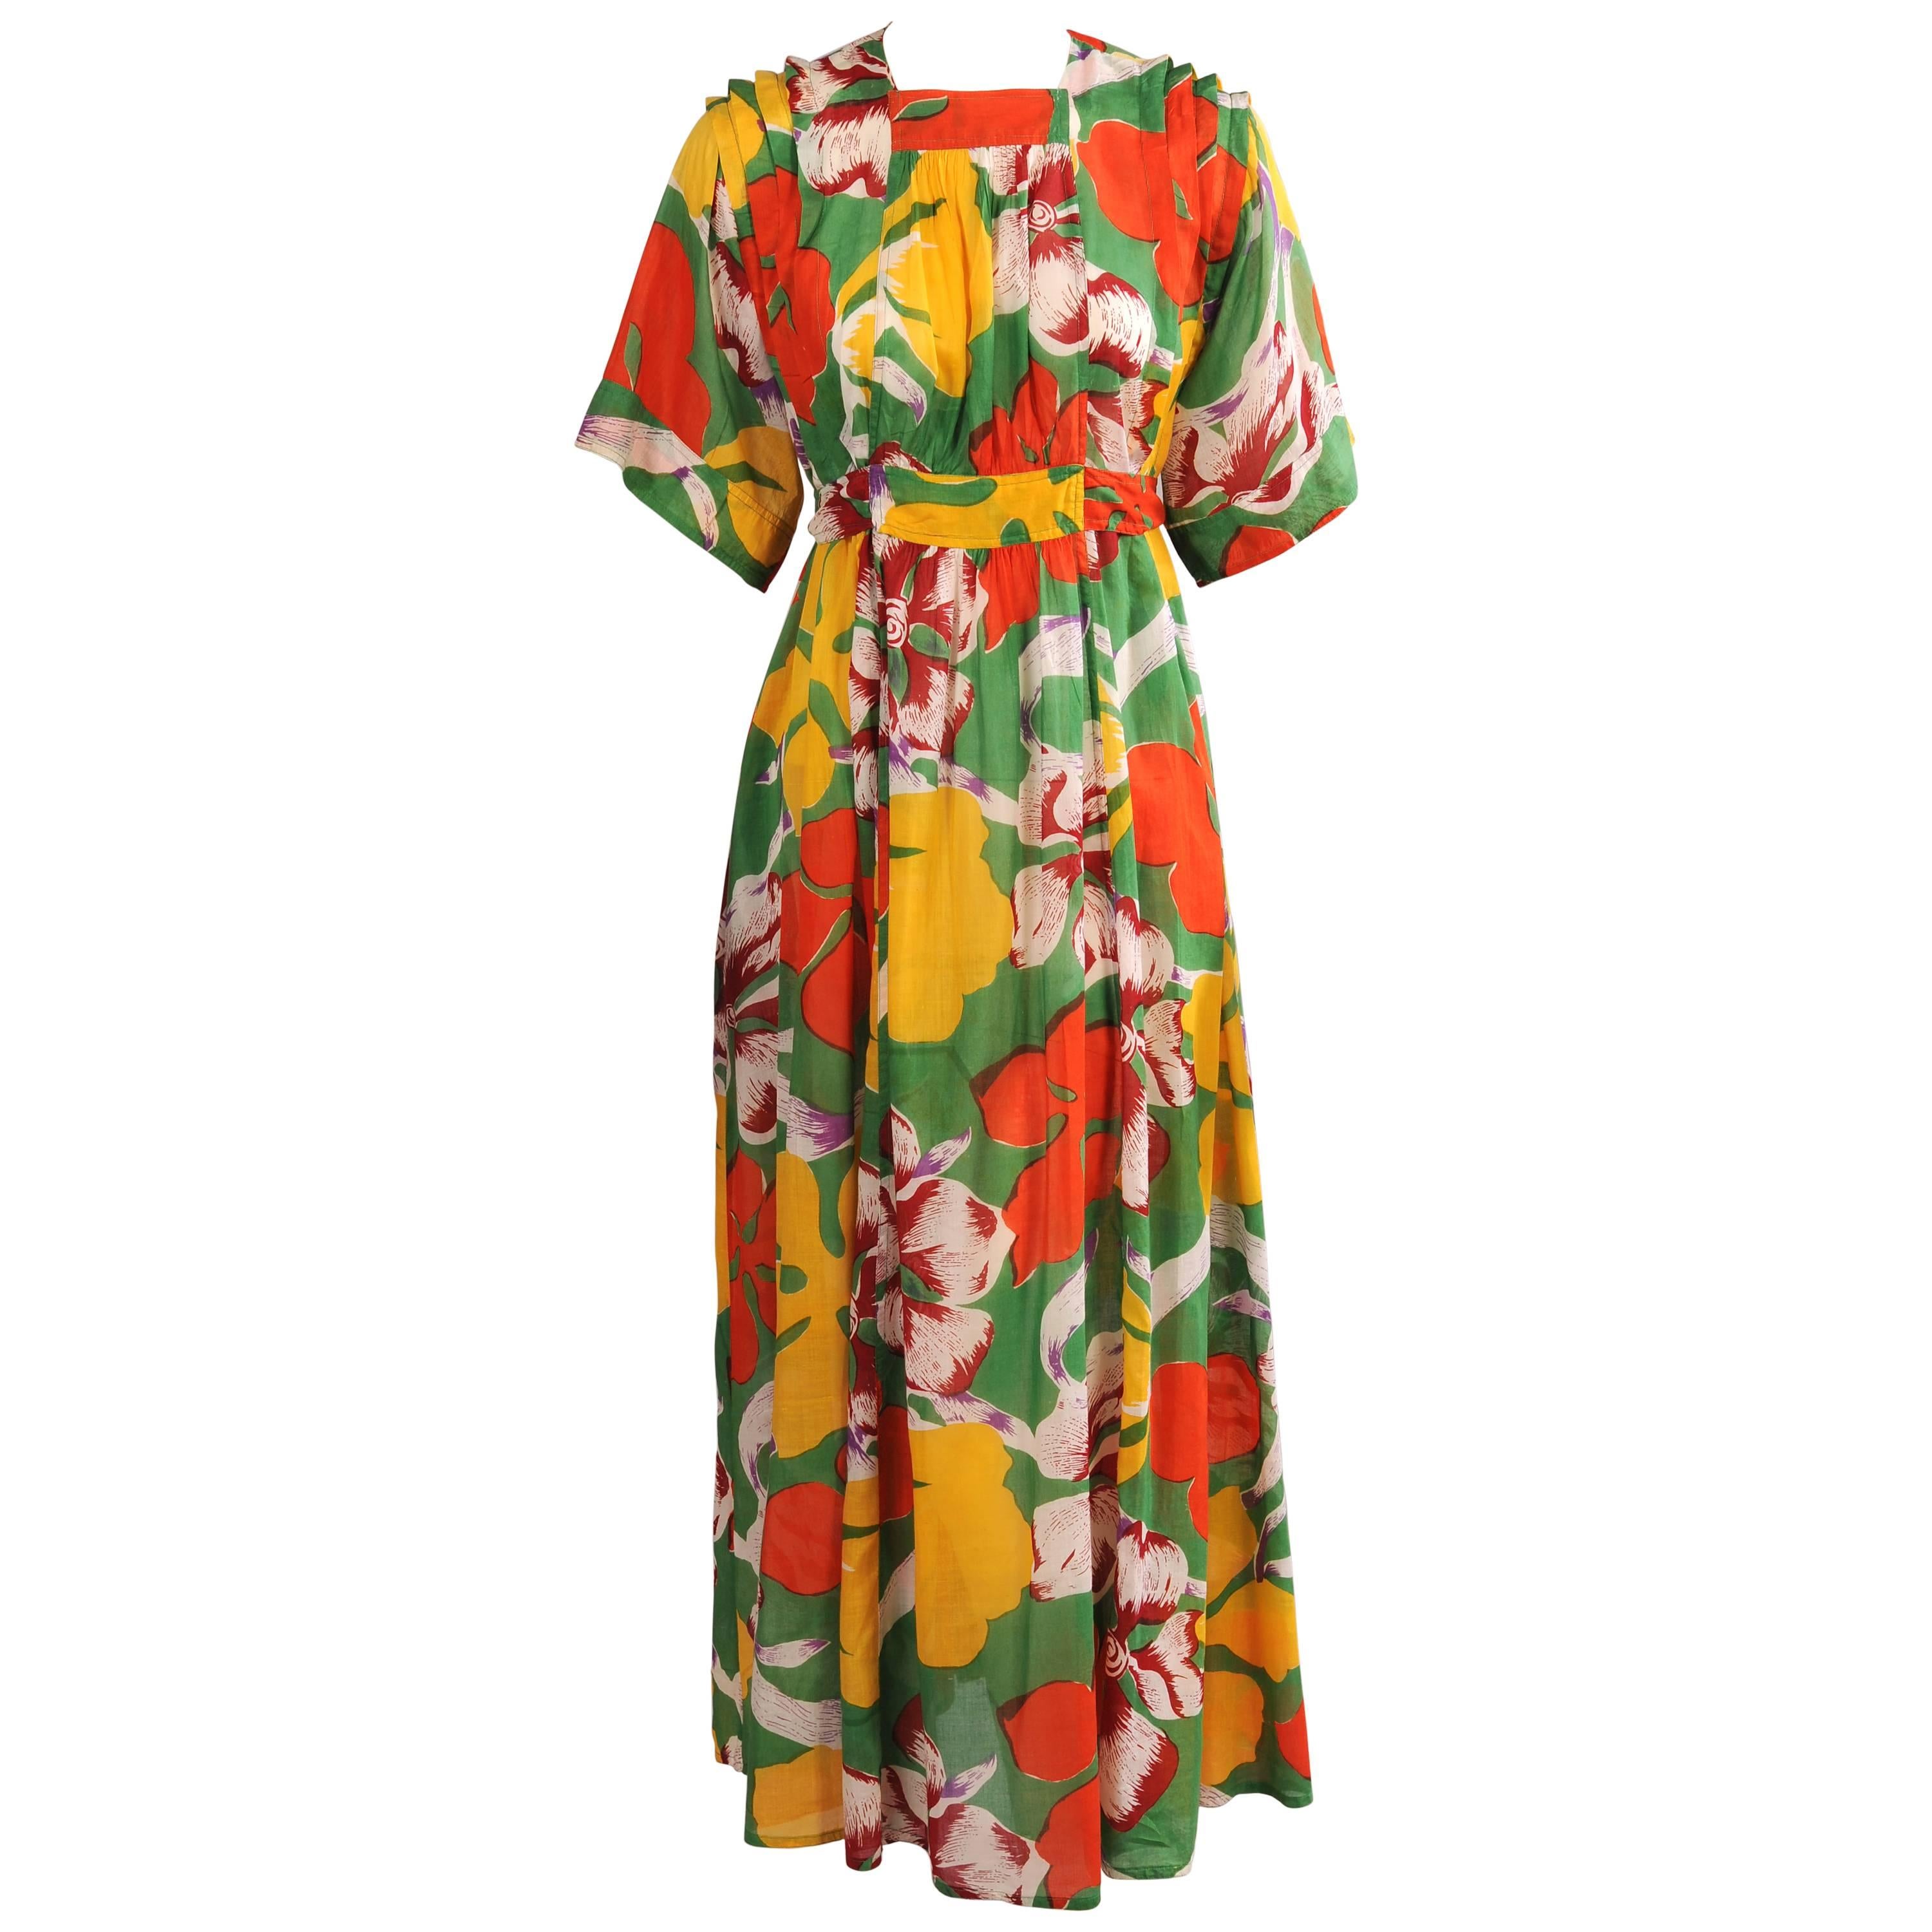 Jean Muir 1970's Colorful Tropical Print Dress